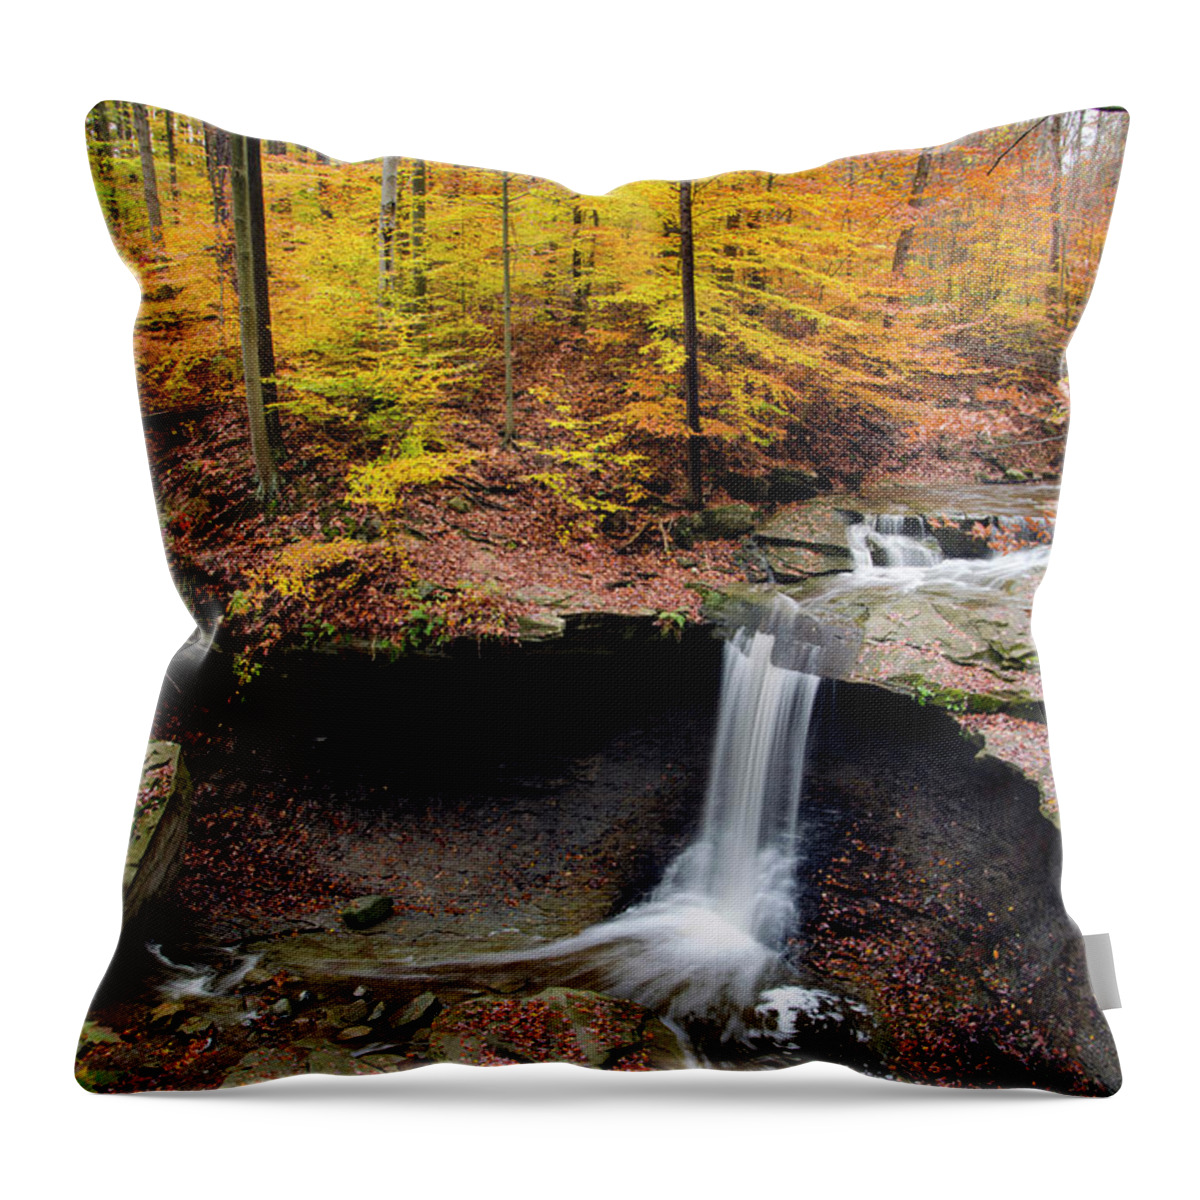 Ohio Throw Pillow featuring the photograph Blue Hen Falls 2 by Ann Bridges